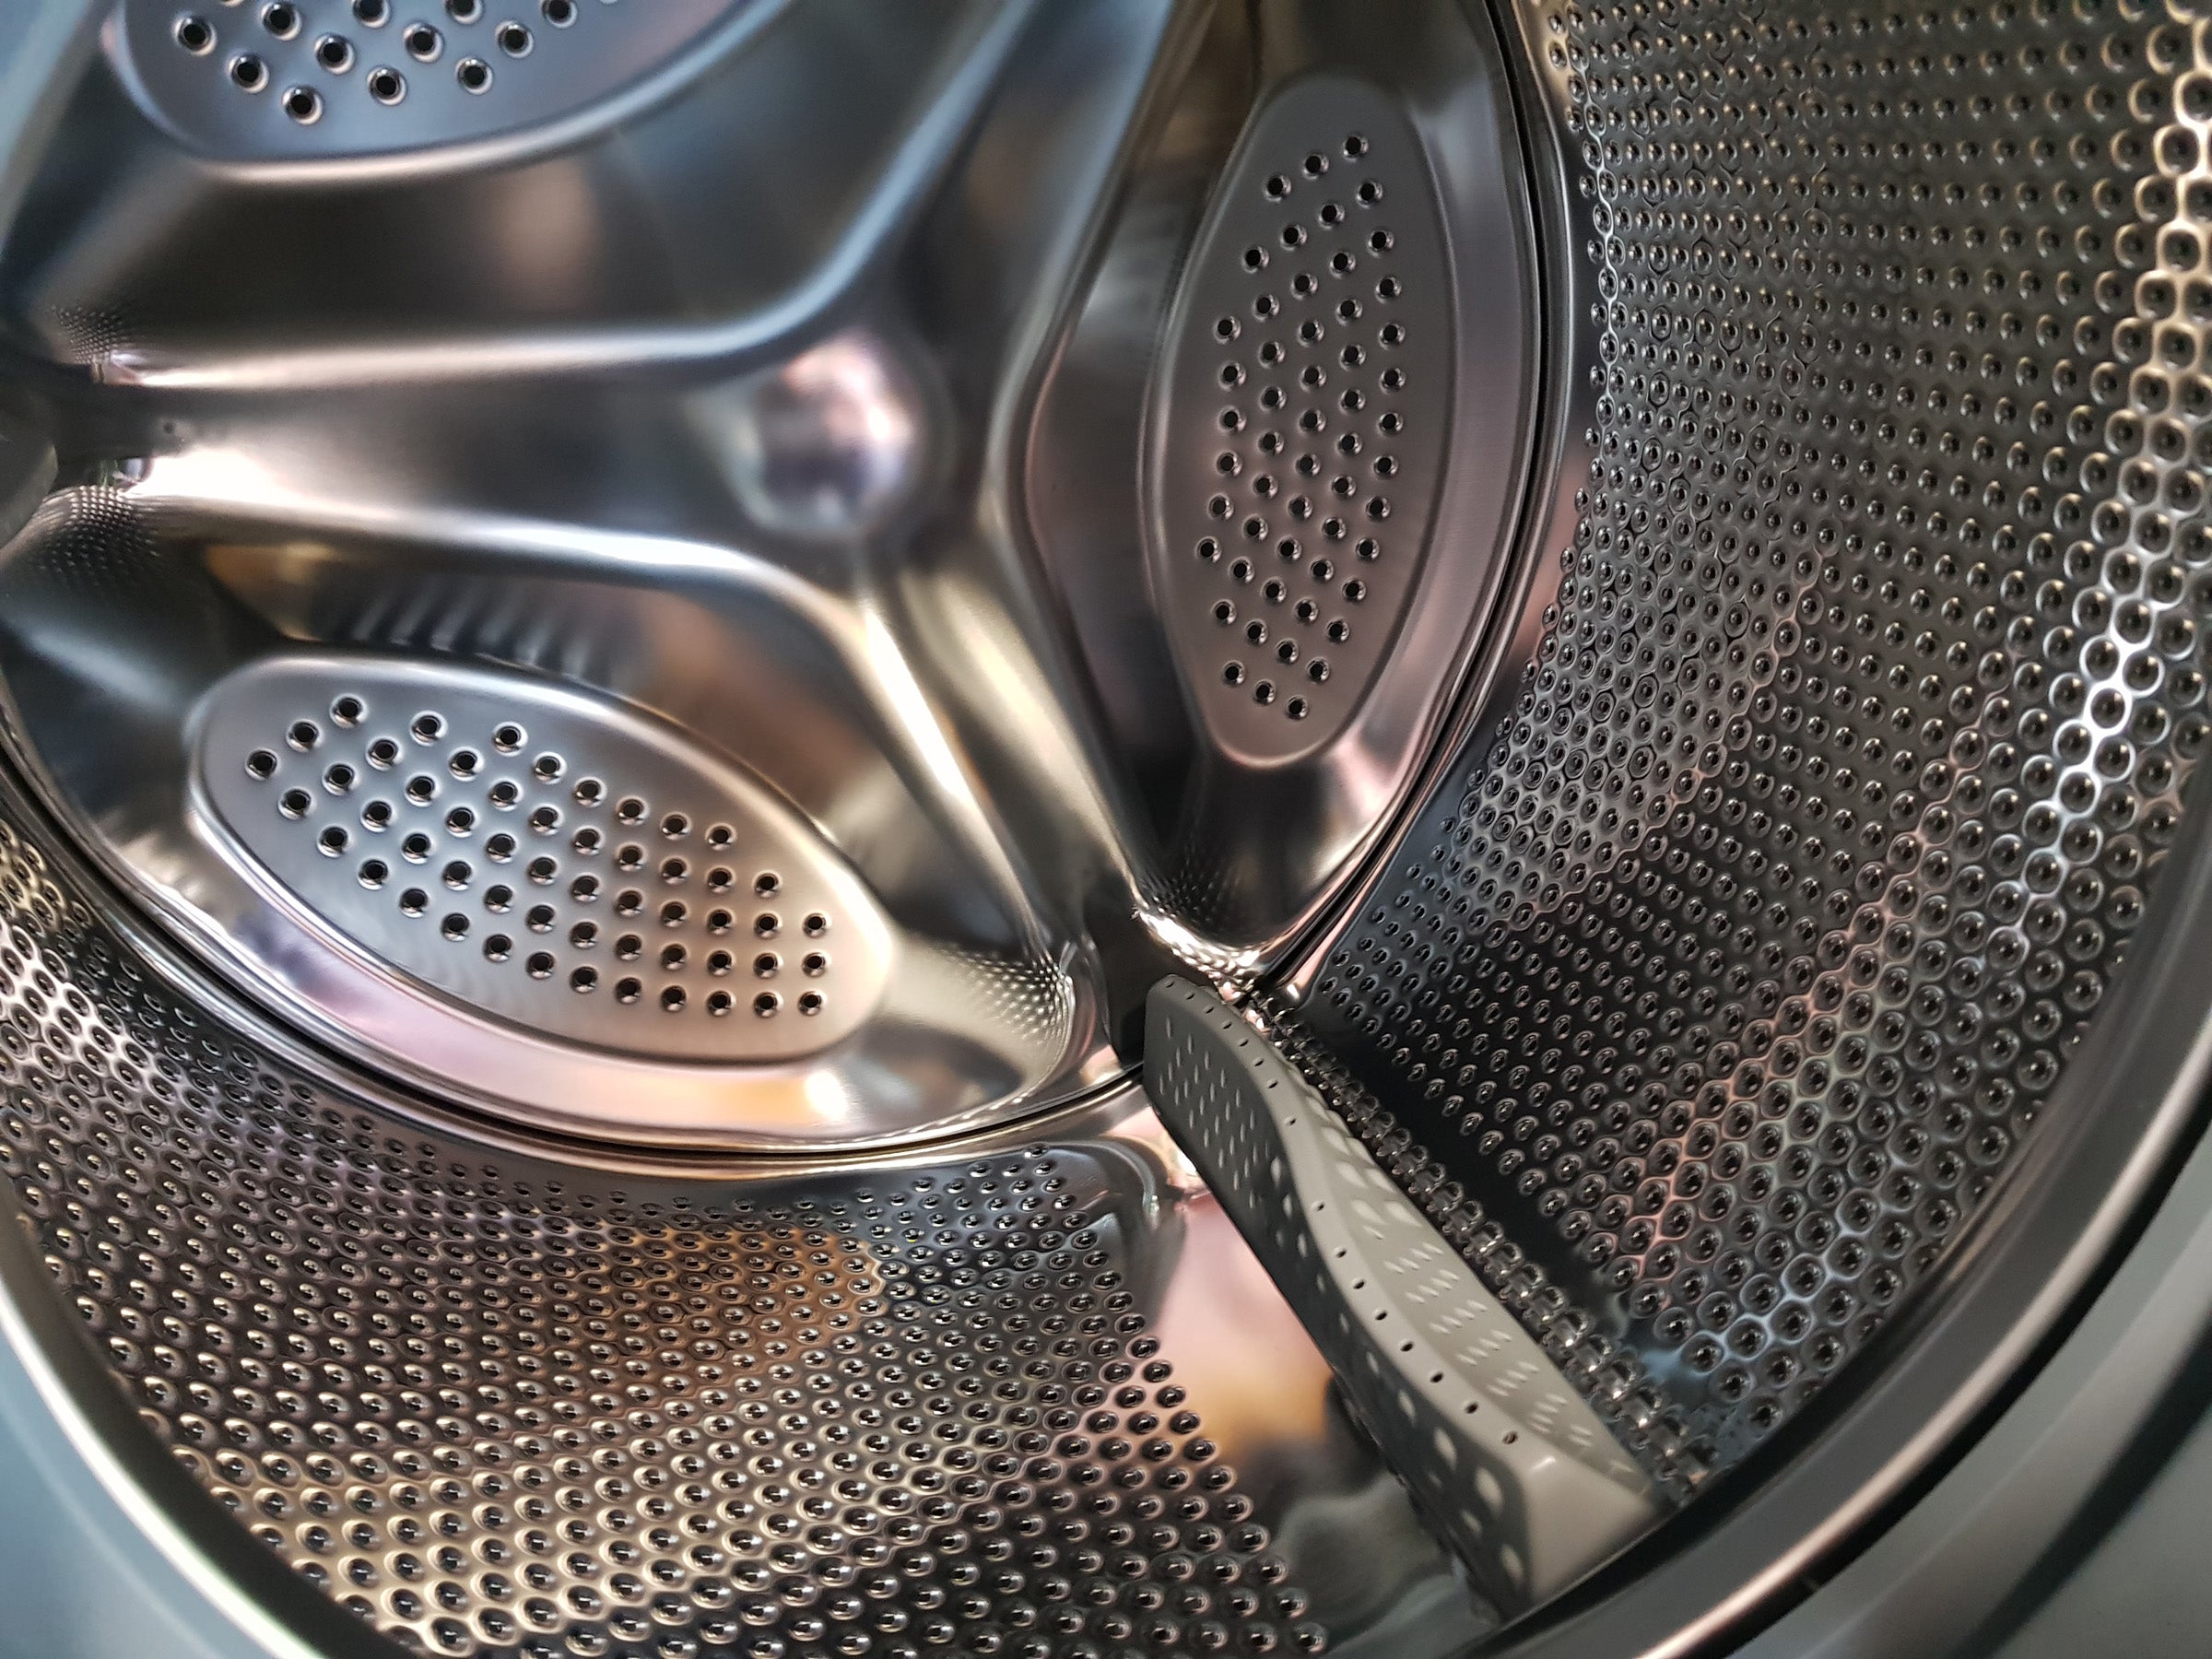 Close-up of Logik L814WM16 washing machine drum interior.